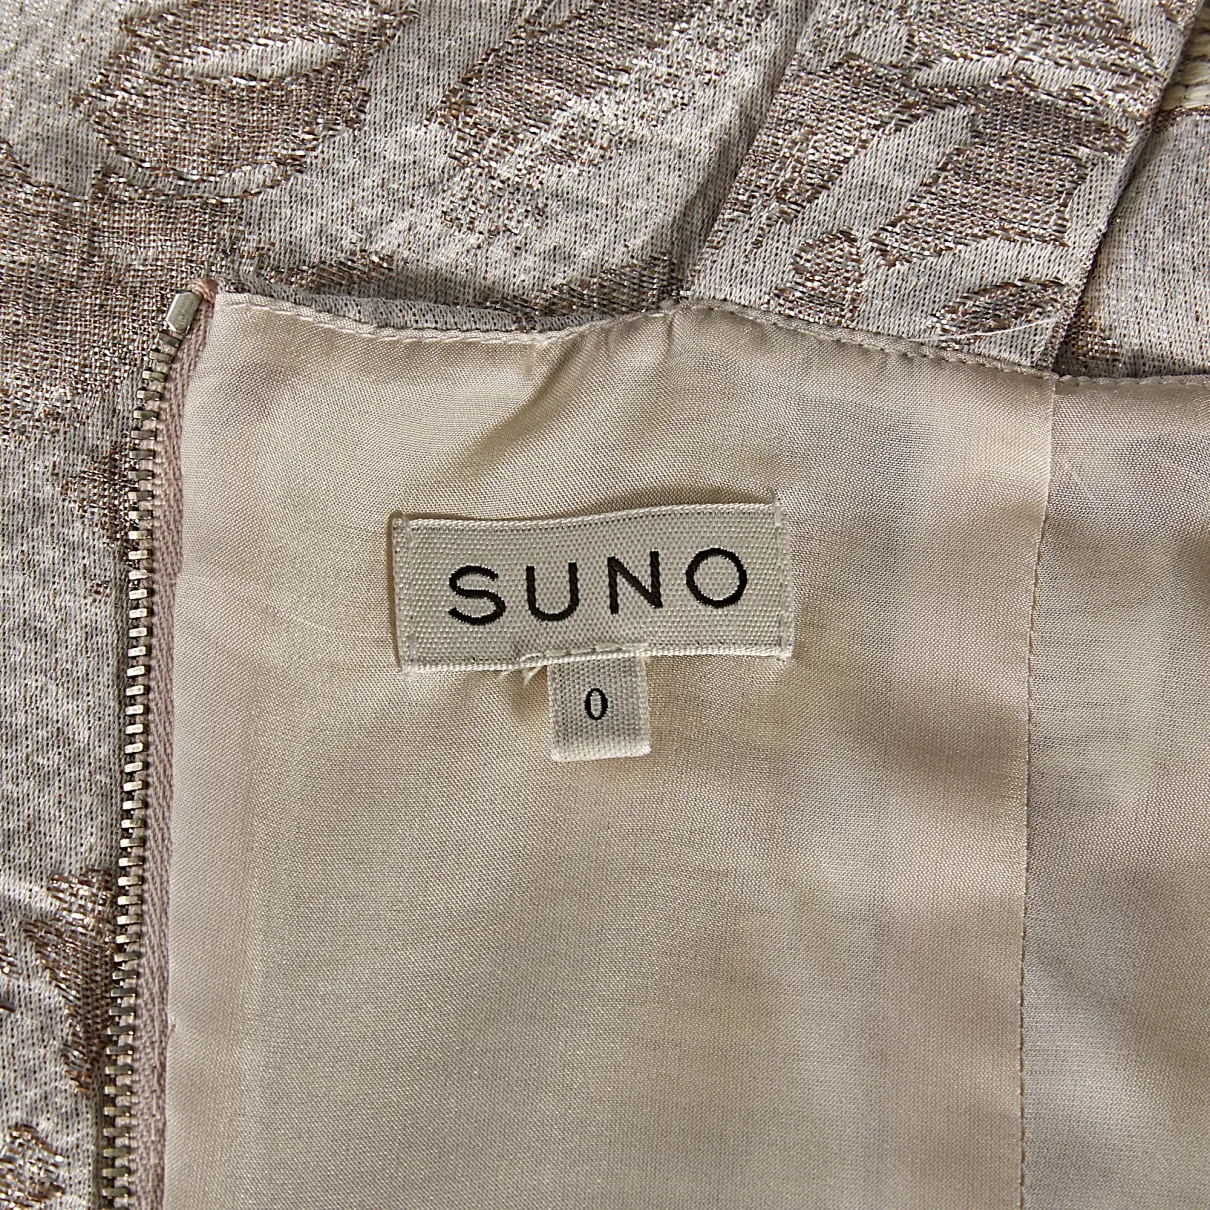 Buy Suno Blouse online